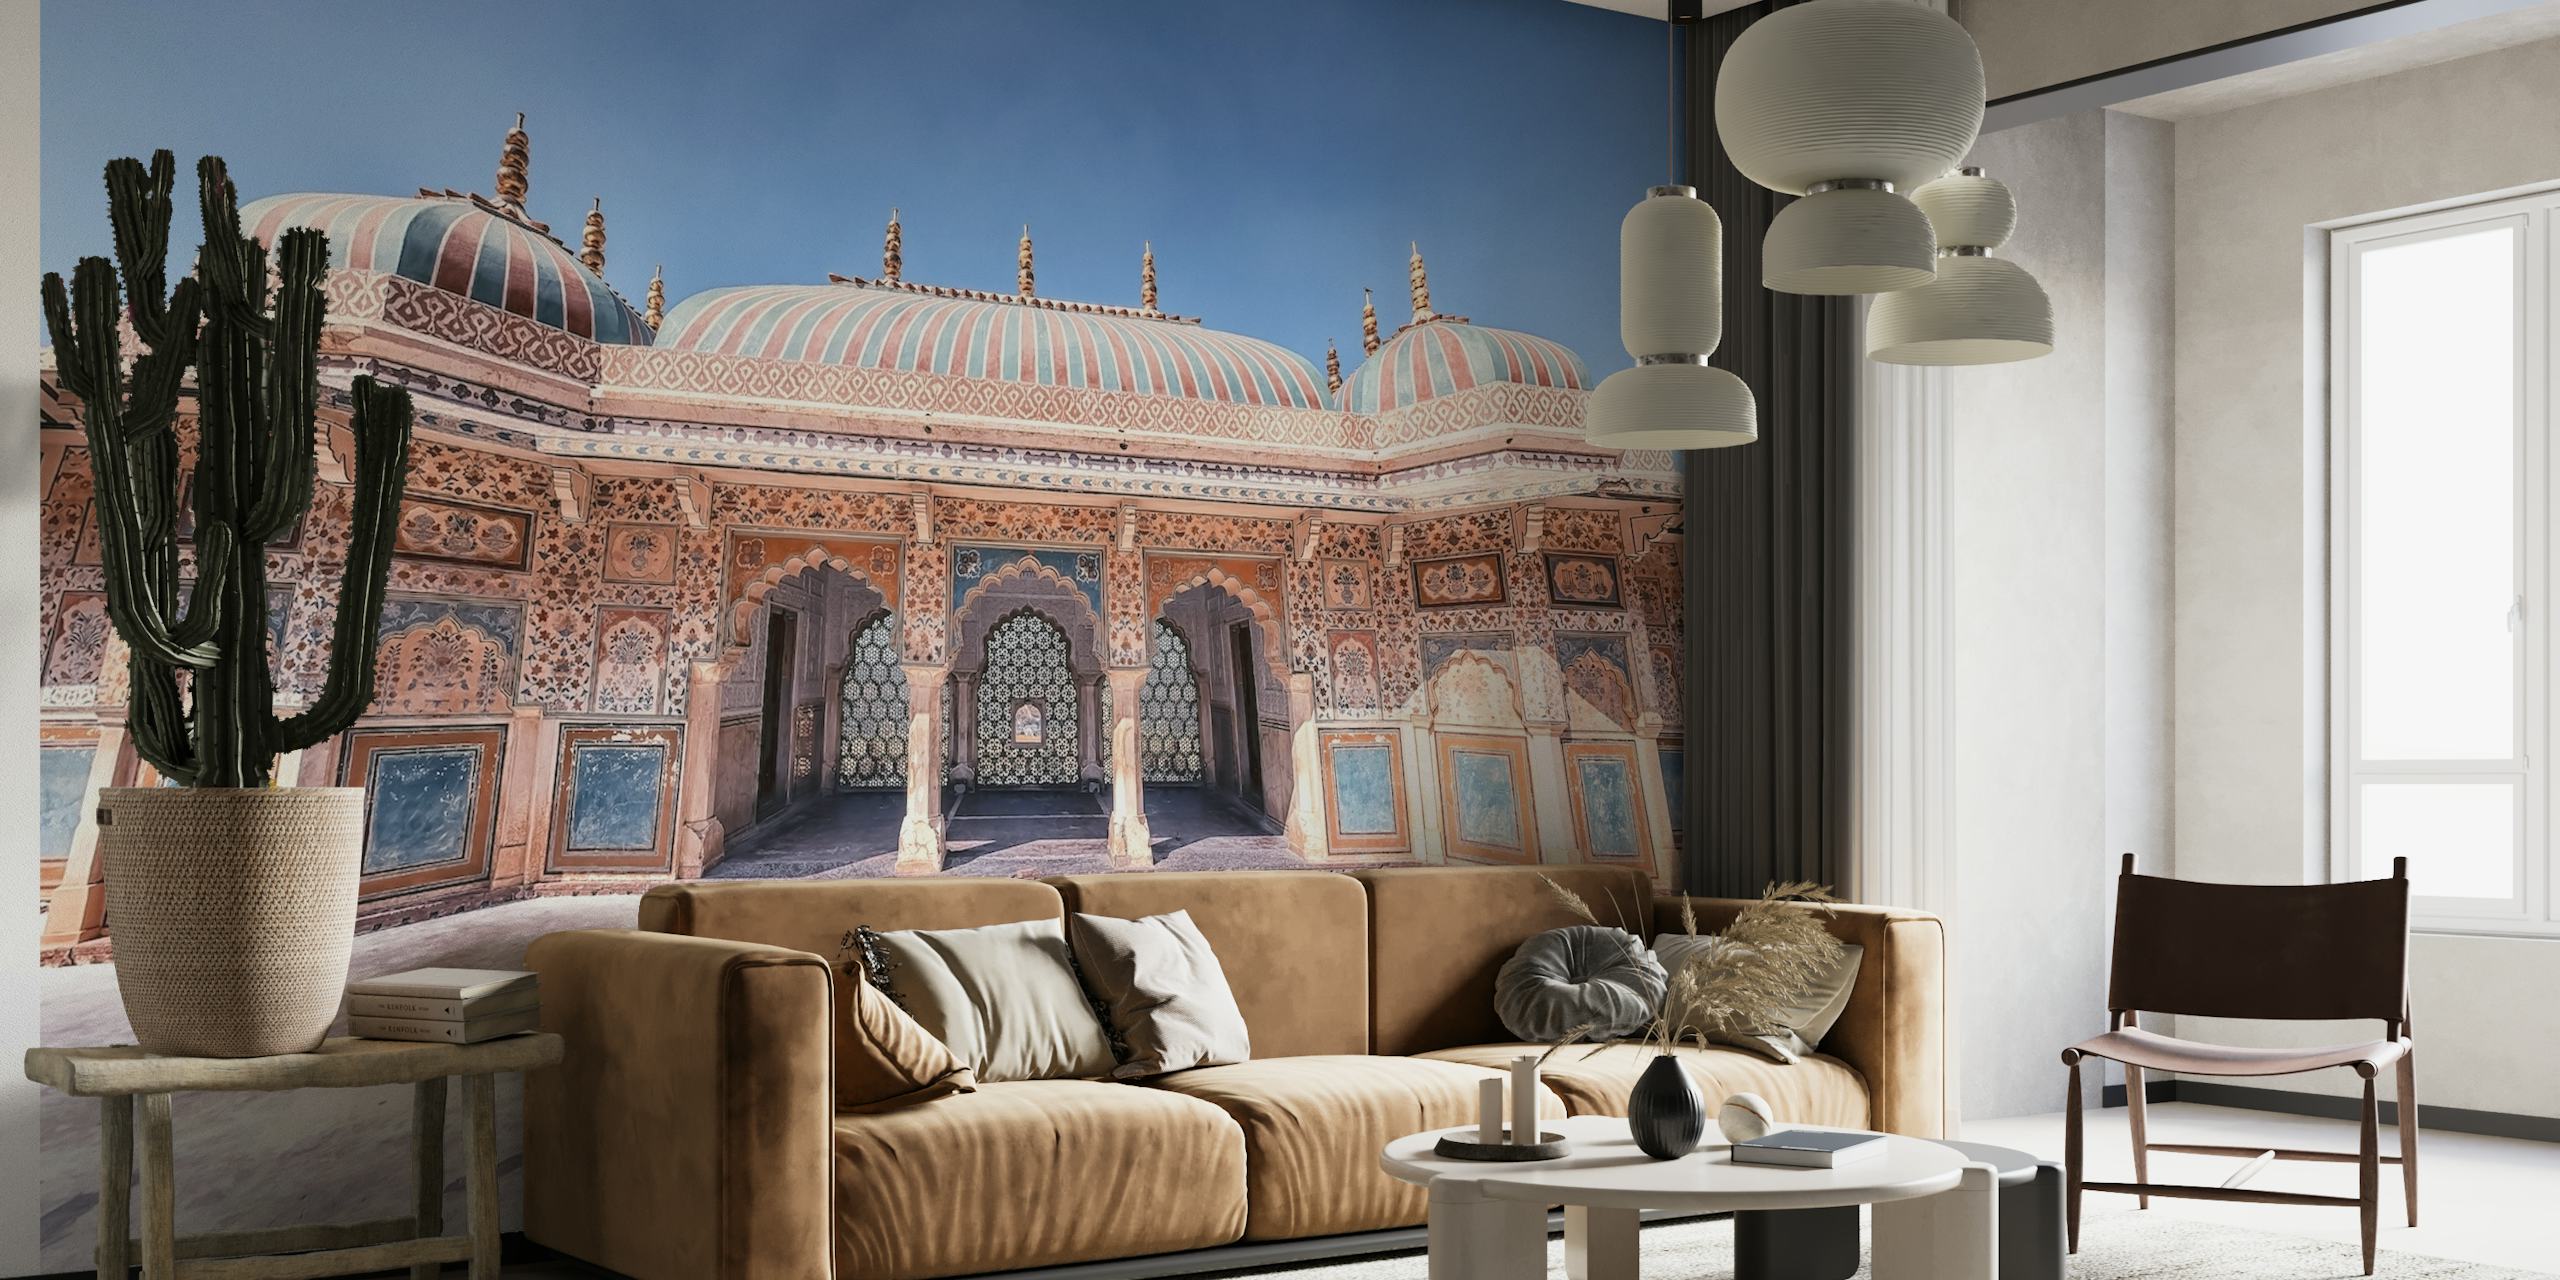 Amber Fort-veggmaleri som viser den majestetiske indiske arkitekturen og intrikate palassdetaljer